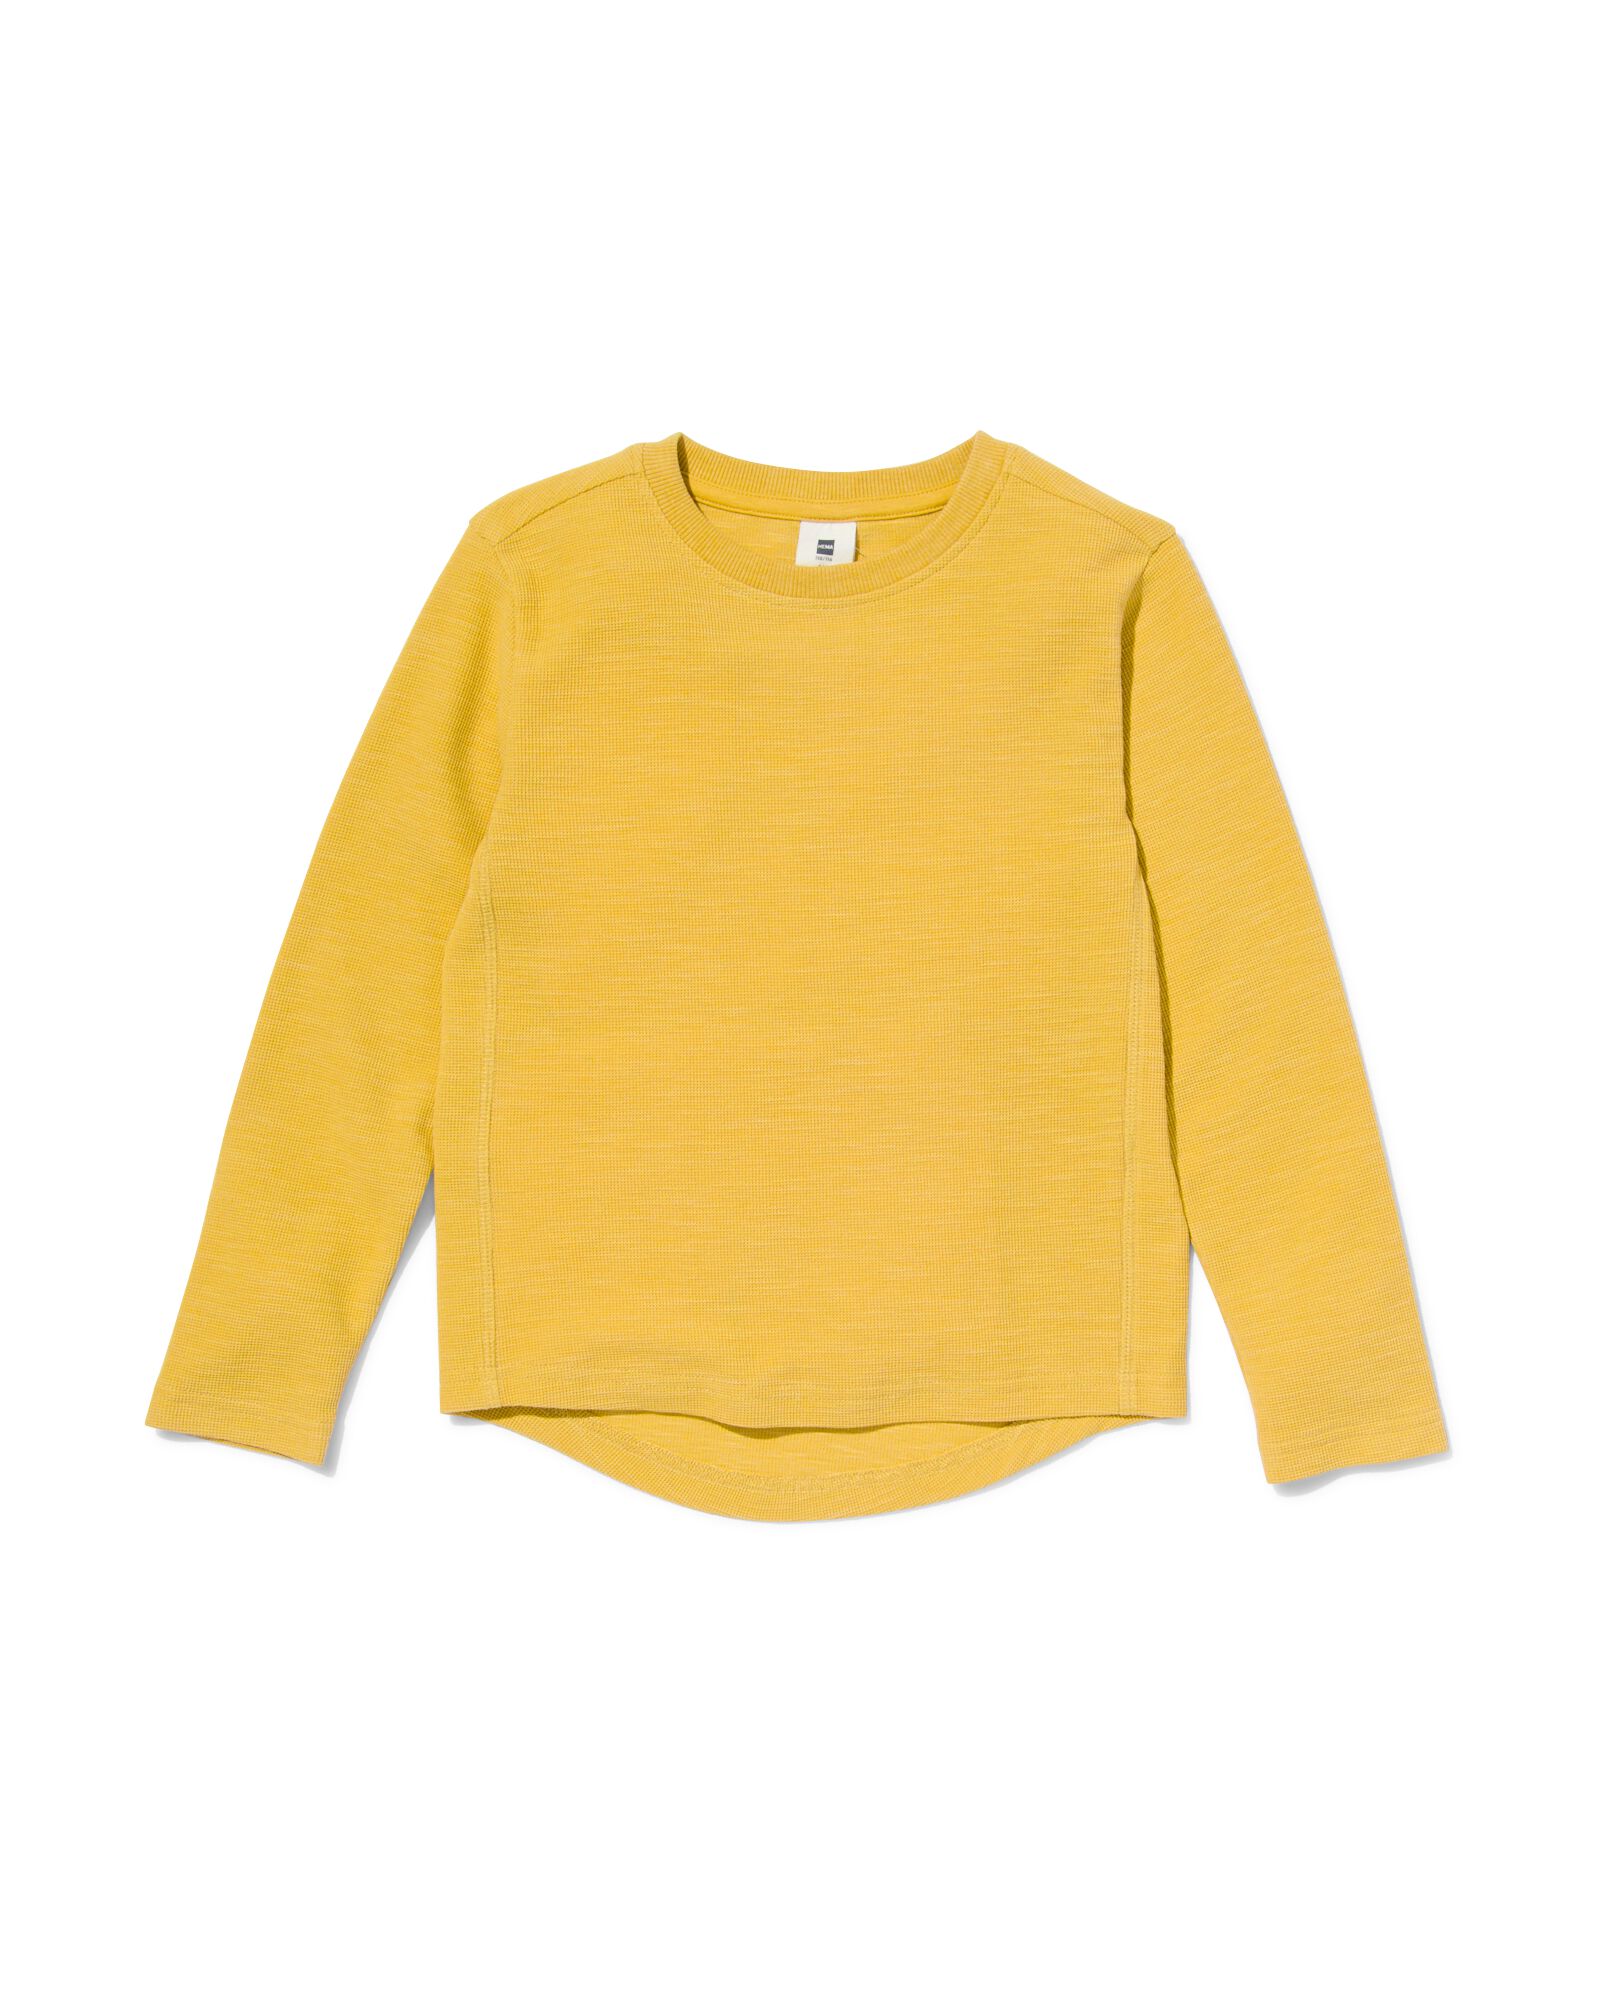 Kinder-Sweatshirt, Waffelstruktur gelb - HEMA | Sweatshirts